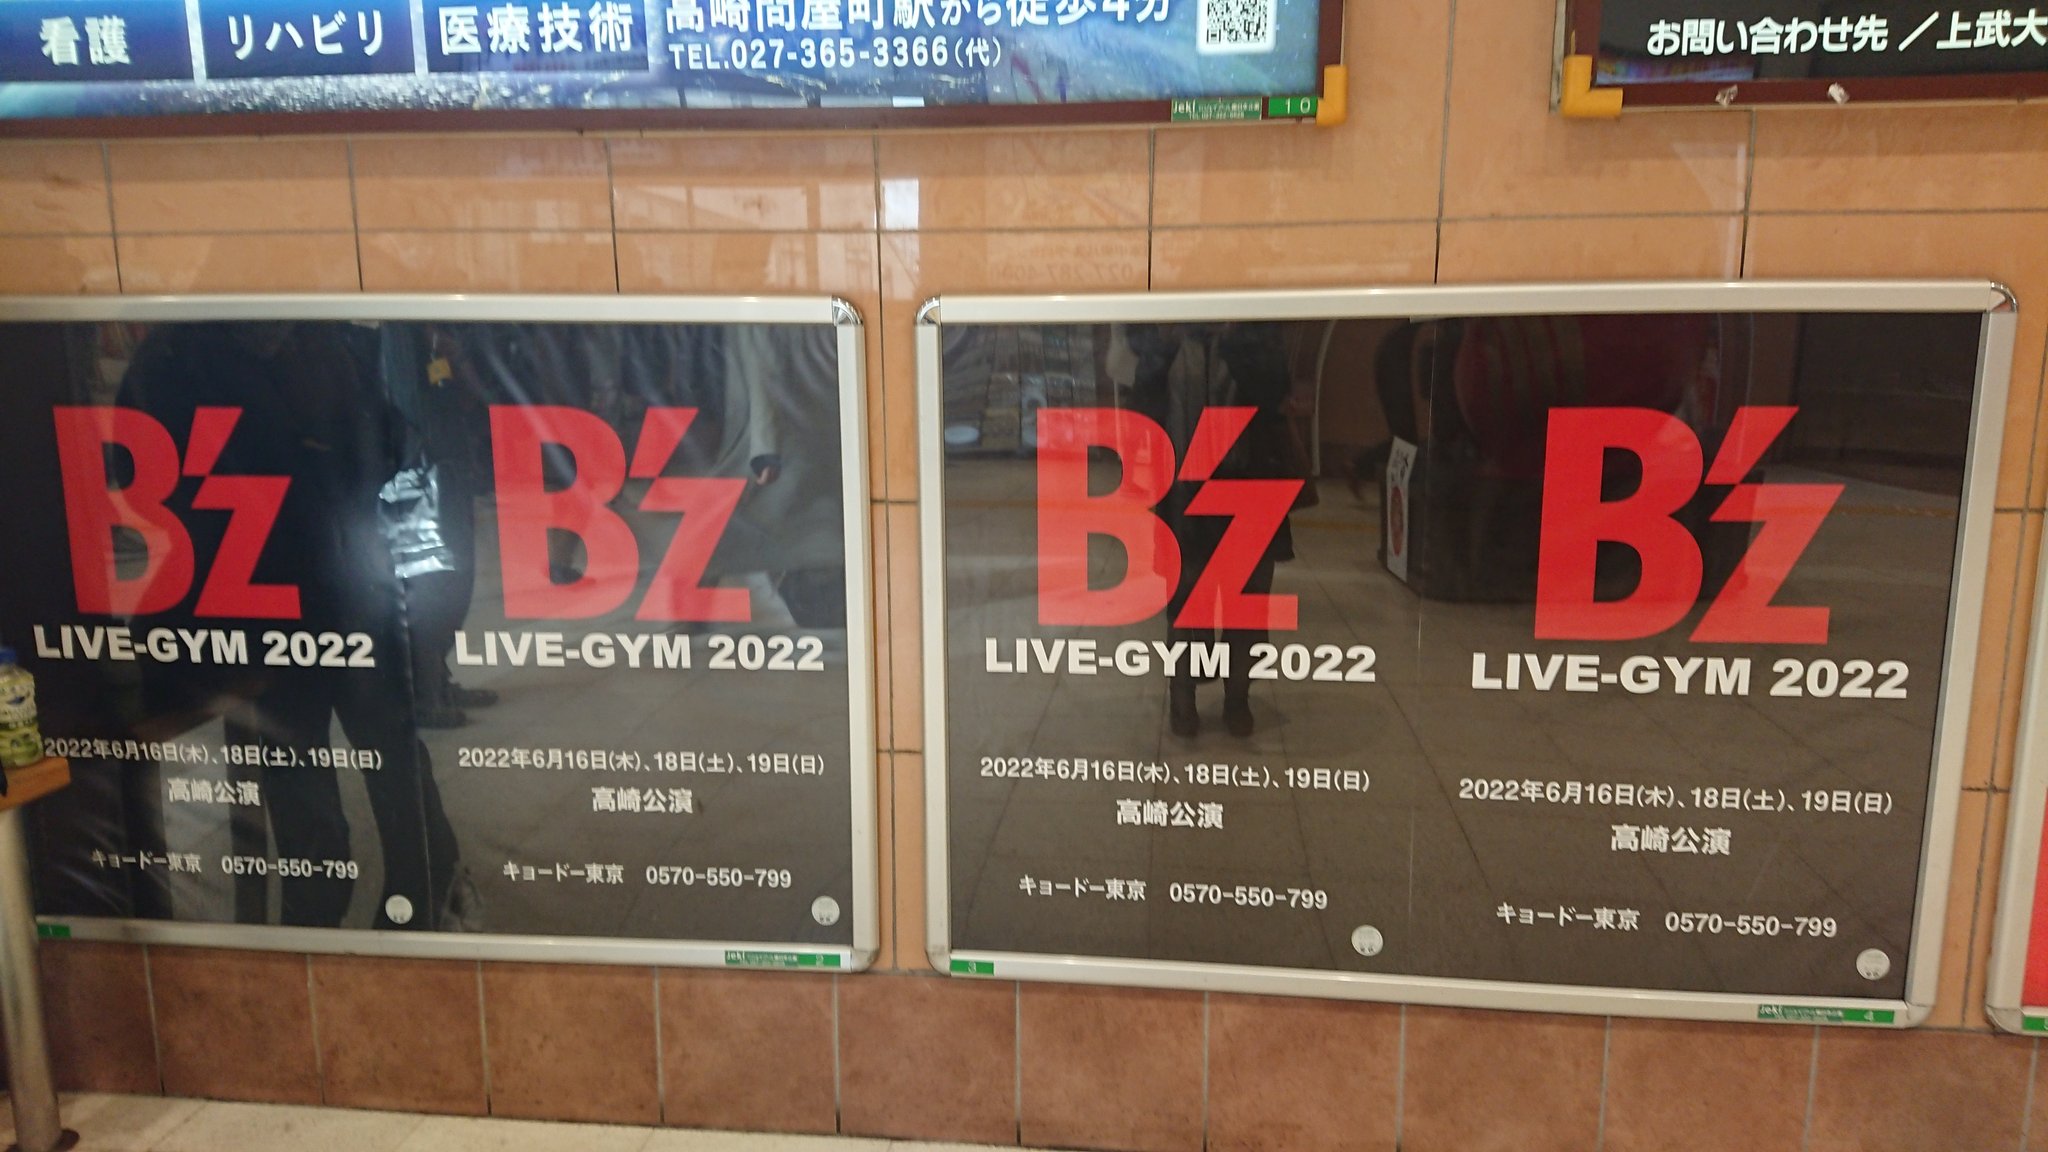 JR高崎駅に掲出された「B'z LIVE-GYM 2022」の告知ポスターの写真